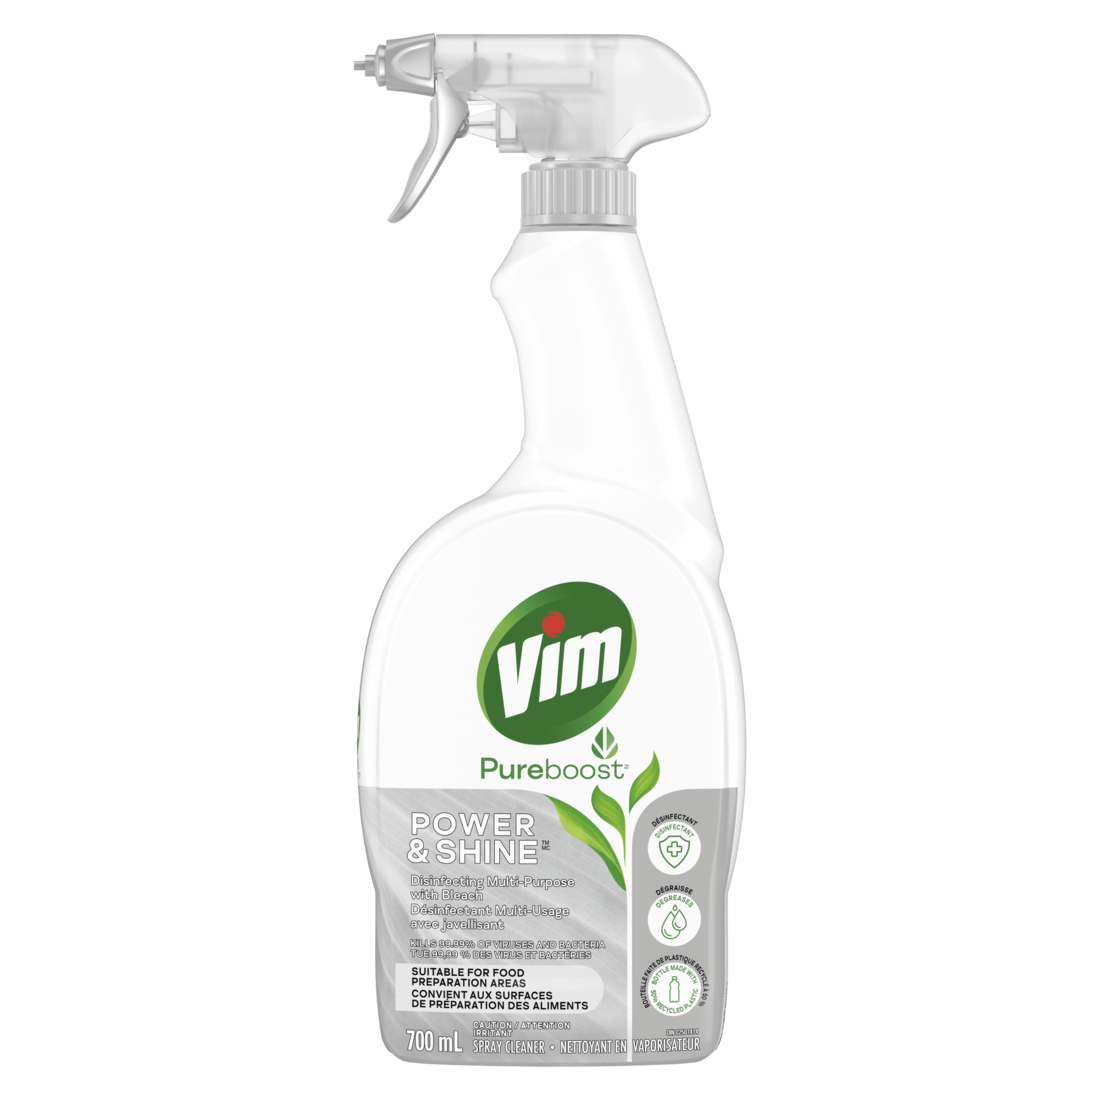 Vim Power & Shine Disinfecting Multi-Purpose with Bleach Spray Cleaner 700ml